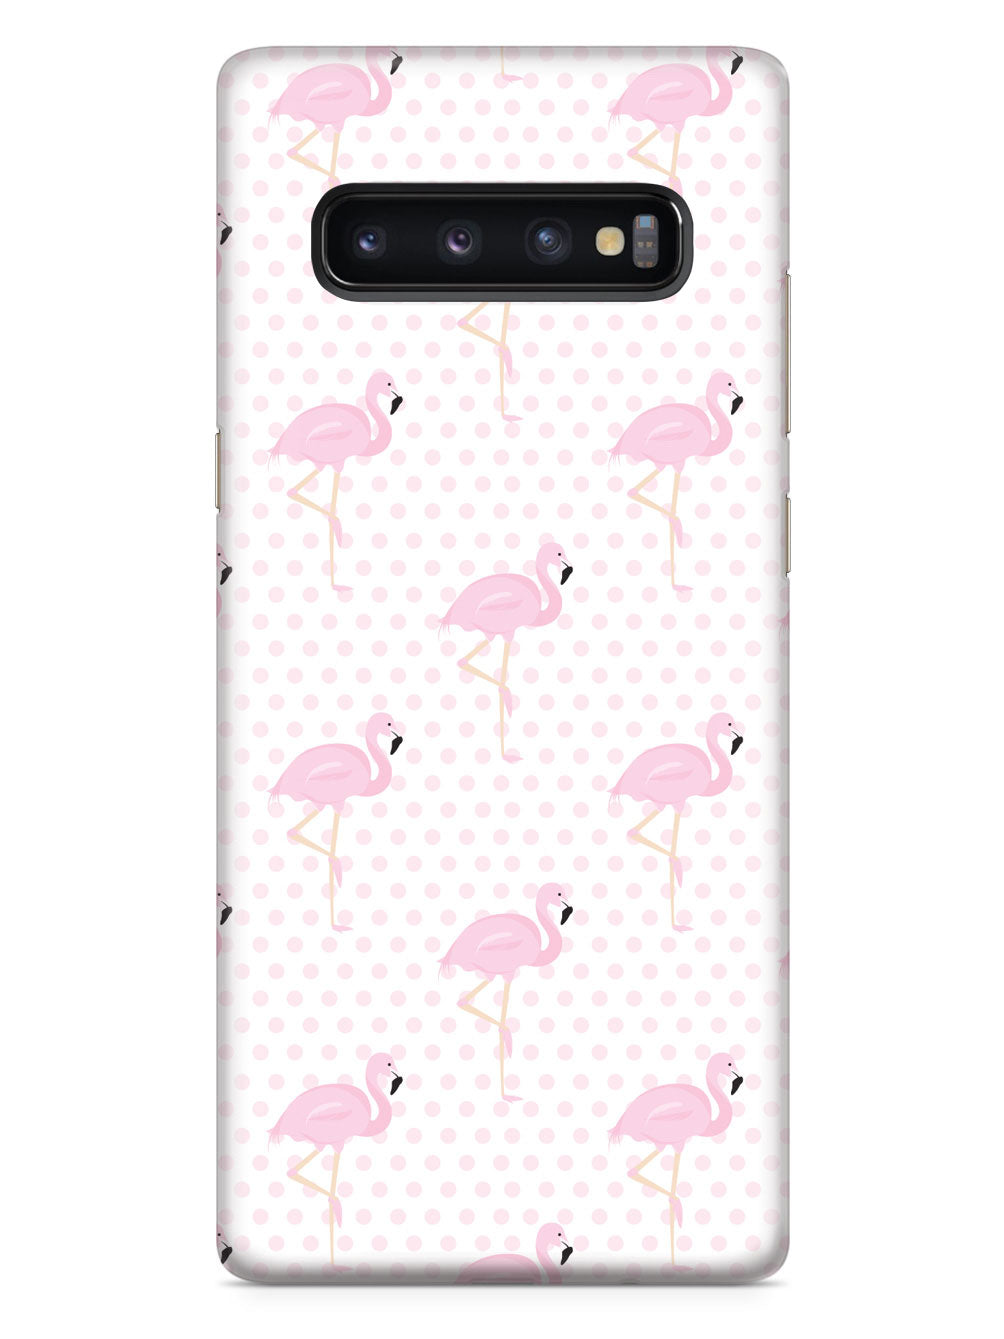 Polka Dot Flamingo Pattern Case